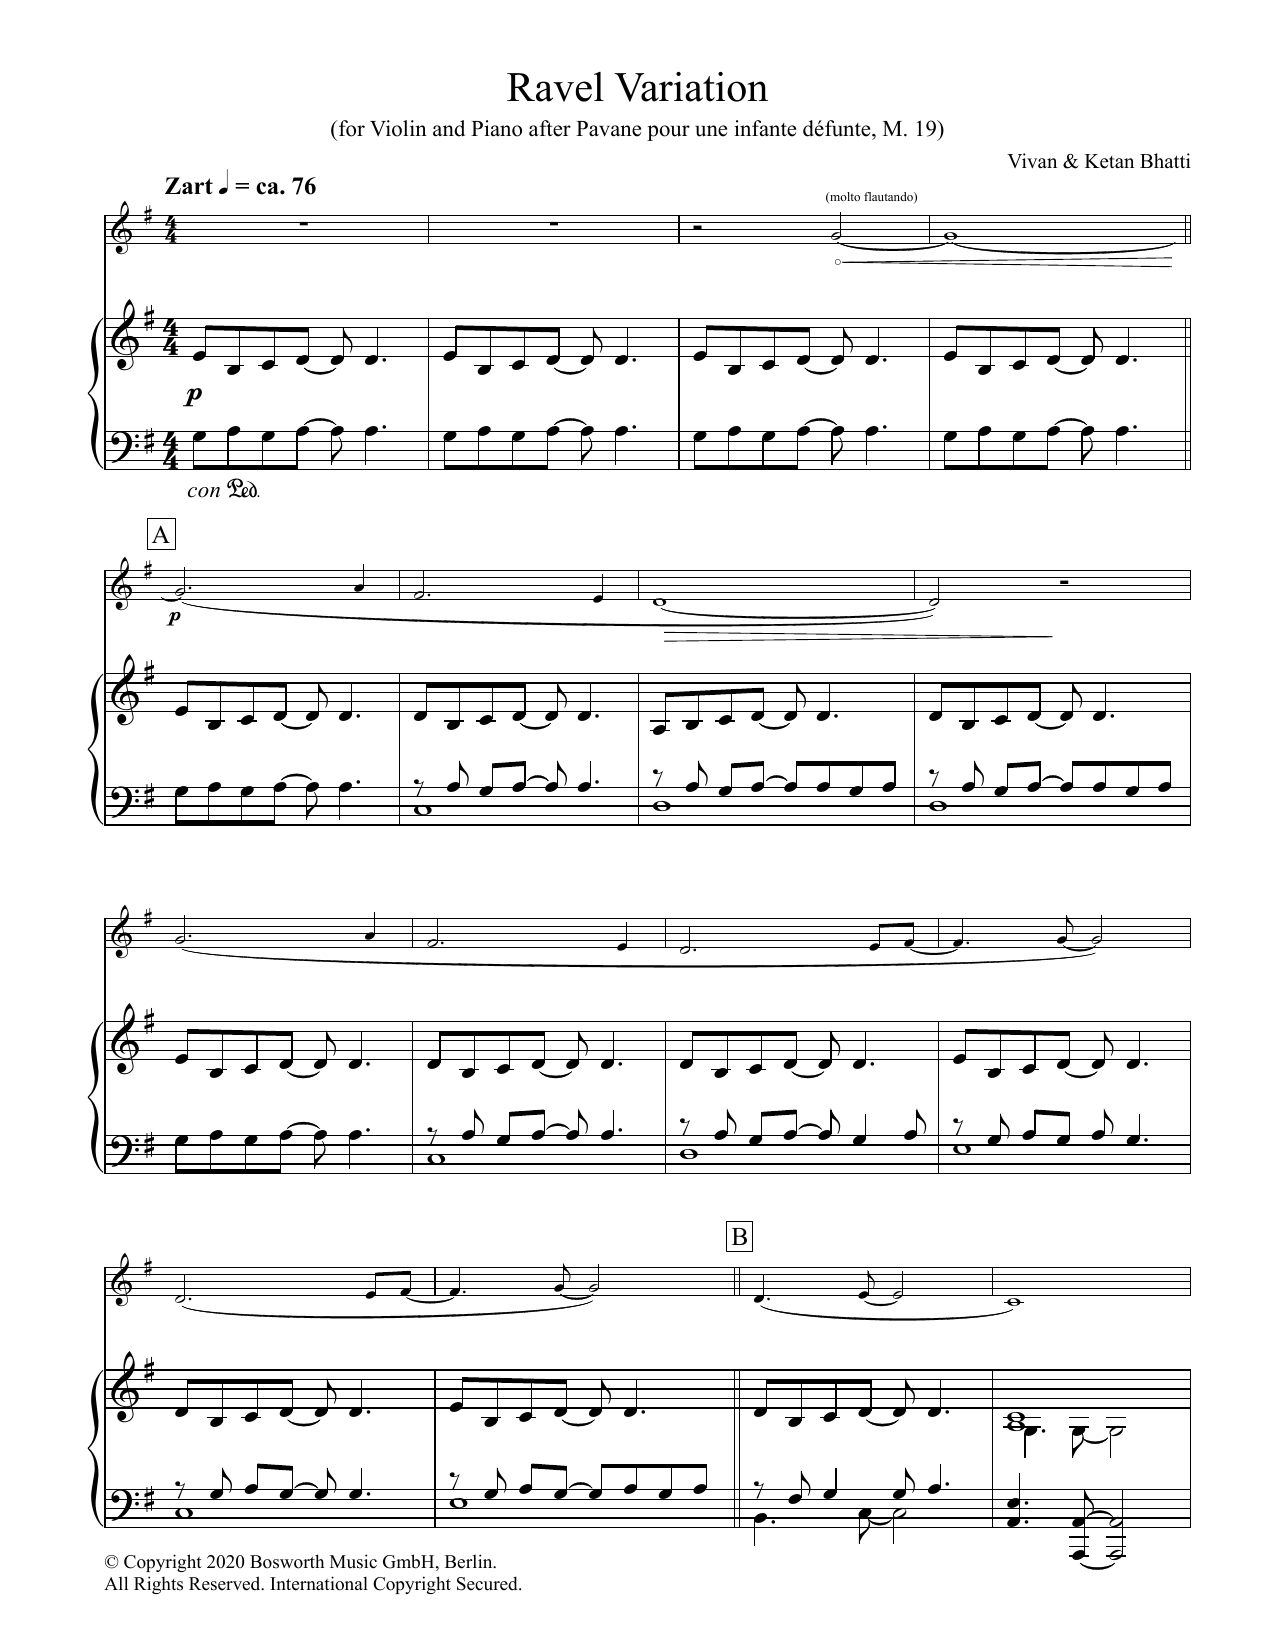 Ketan & Vivan Bhatti Ravel Variation Sheet Music Notes & Chords for Violin and Piano - Download or Print PDF